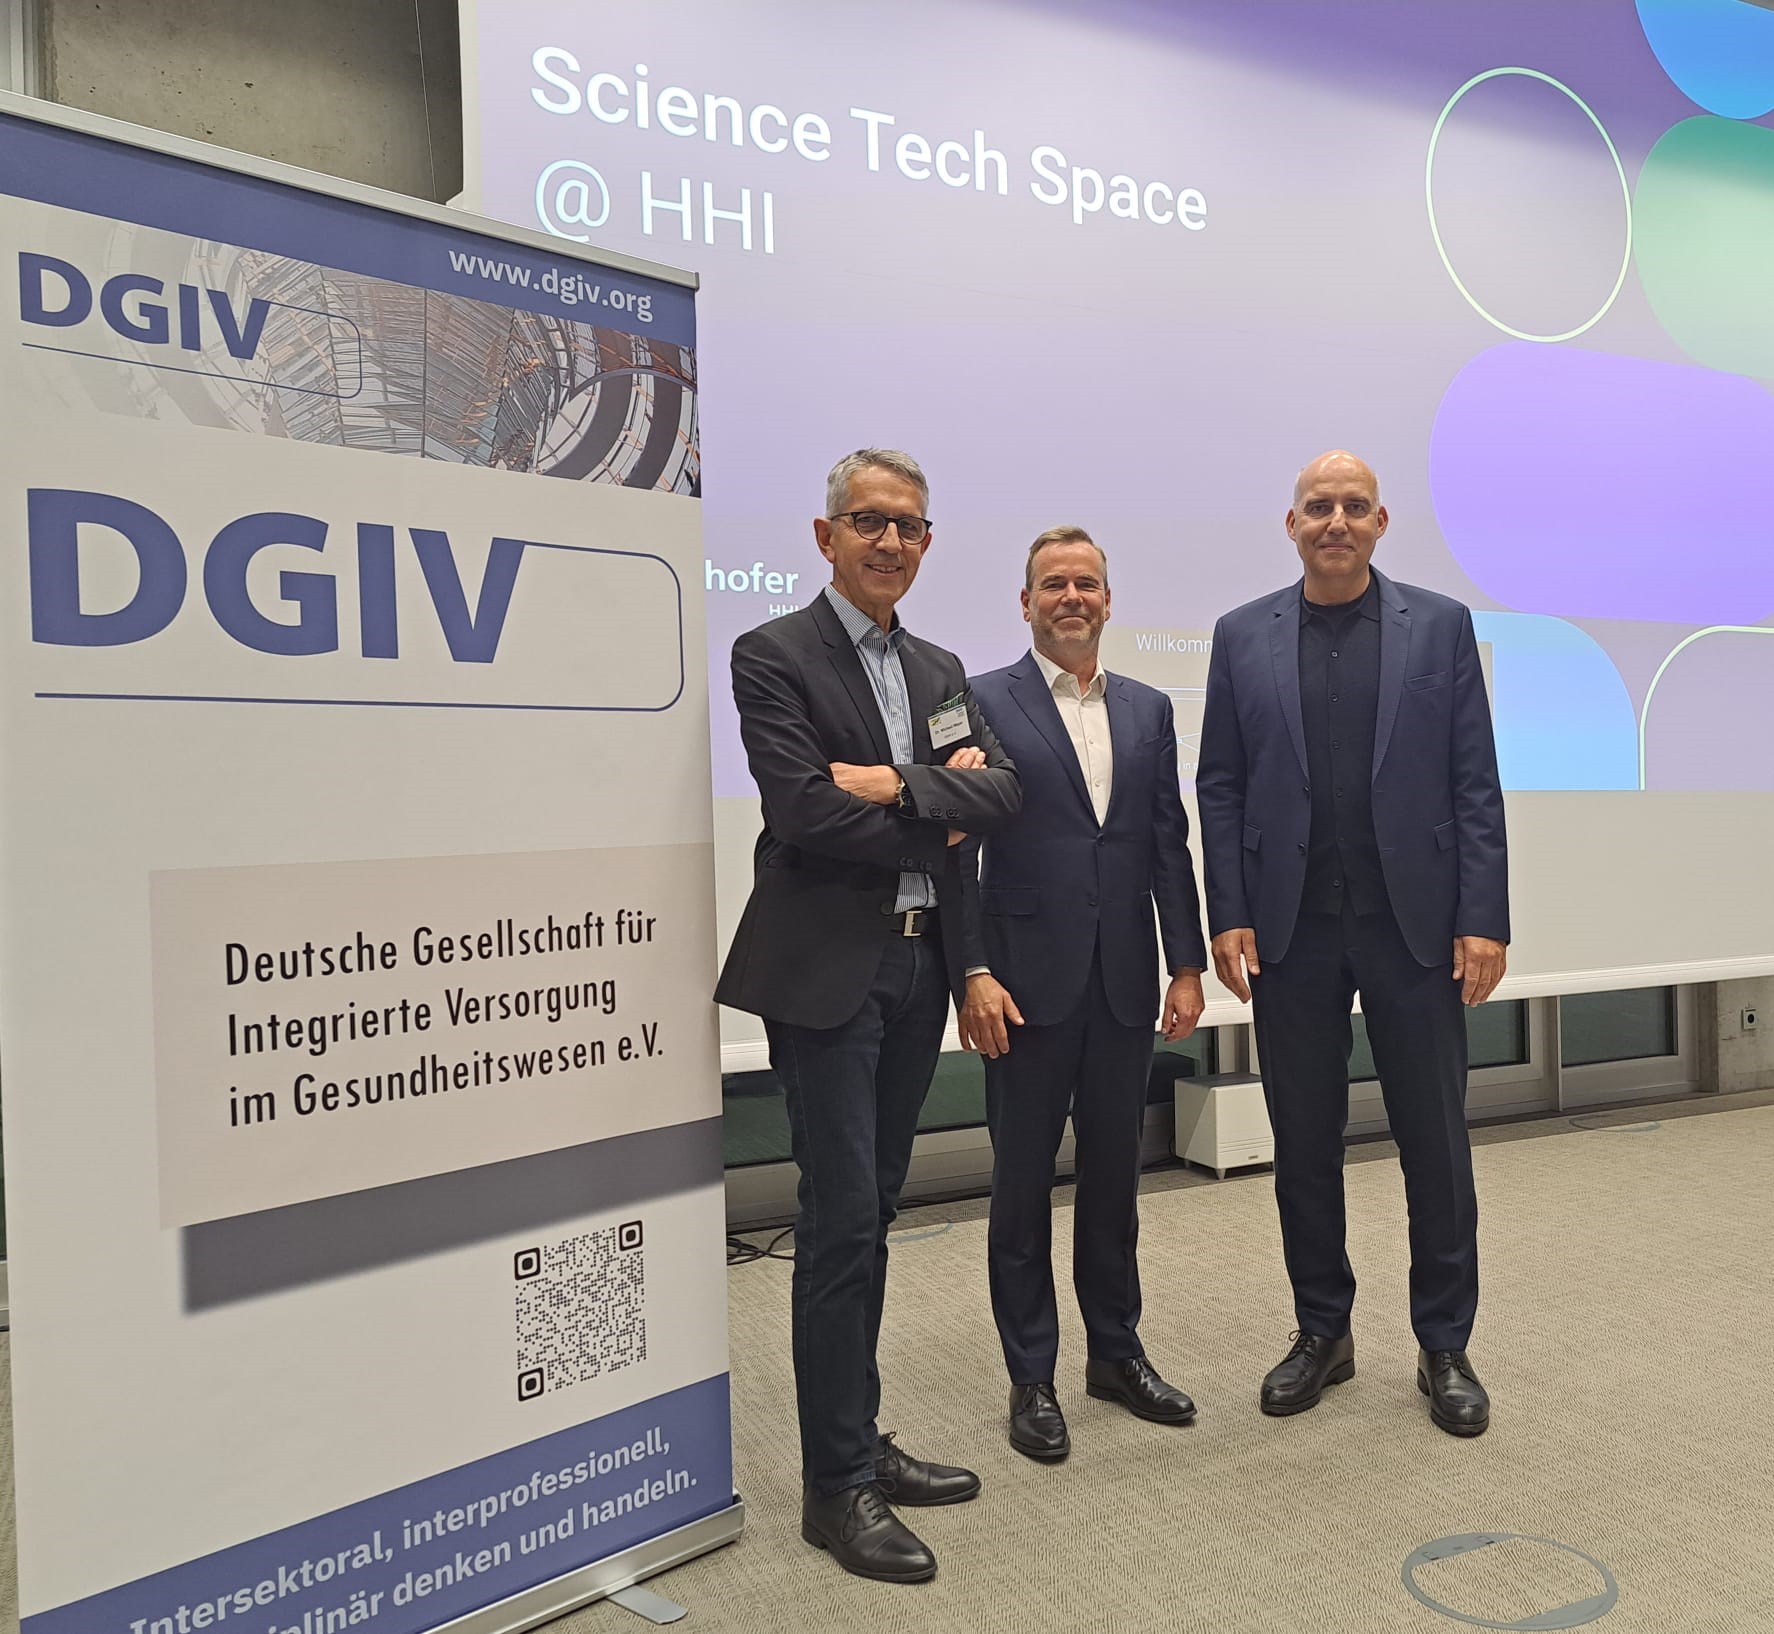 DGIV Stand auf der Science Tech Space, Dr. Michael Meyer (links), Prof. Thomas Wiegand (mitte), Prof. Eckhard Nagel (rechts)